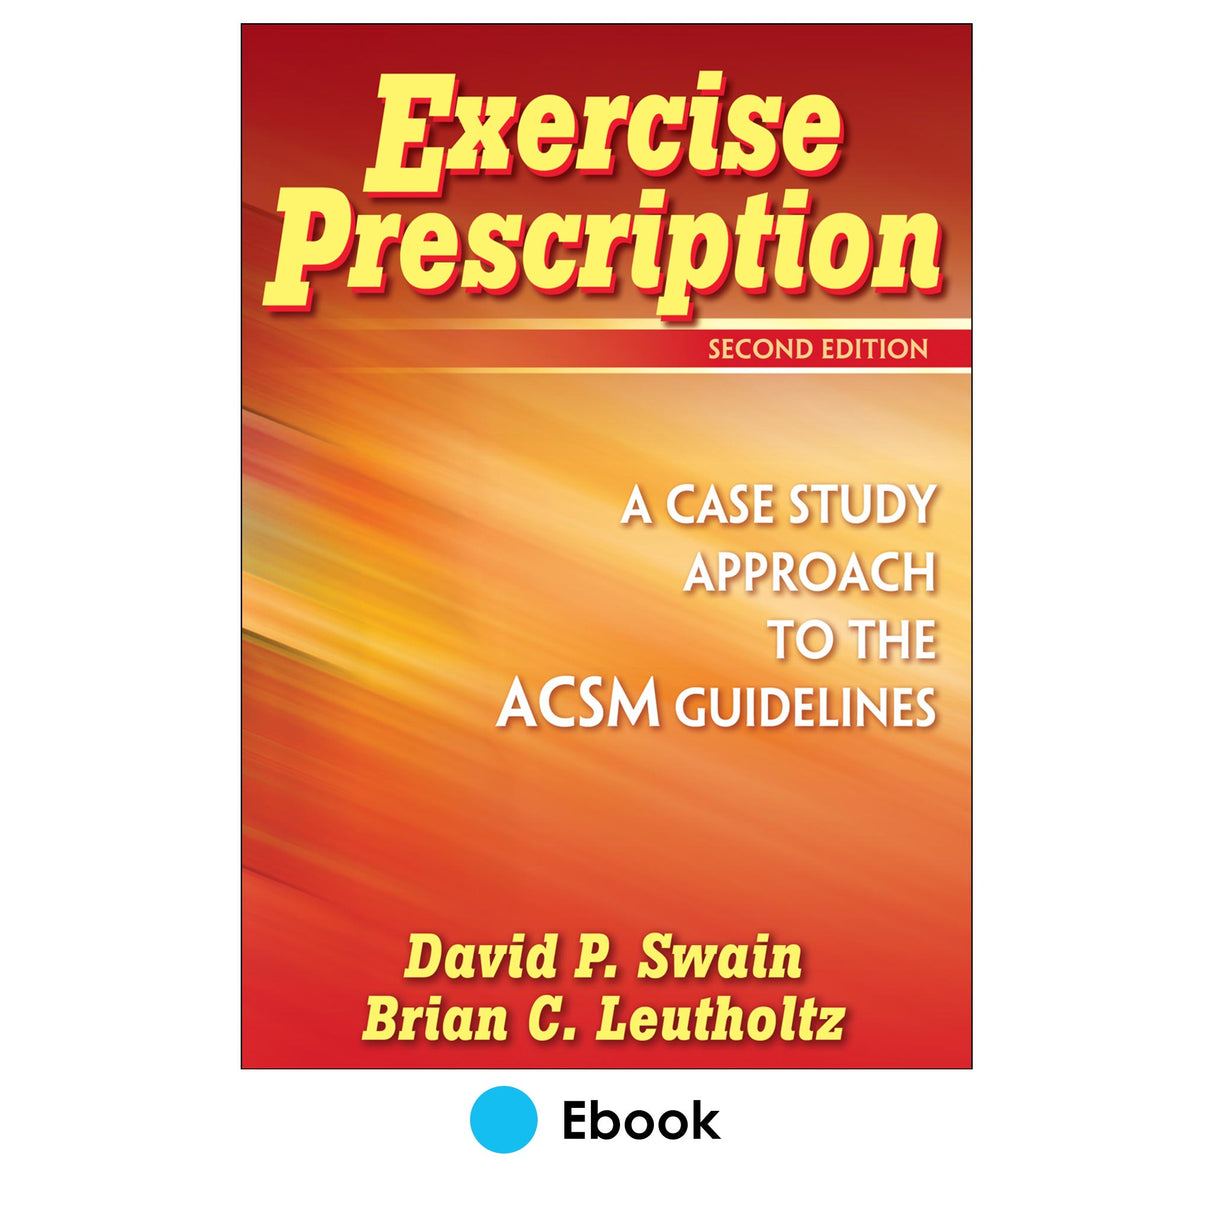 Exercise Prescription 2nd Edition PDF